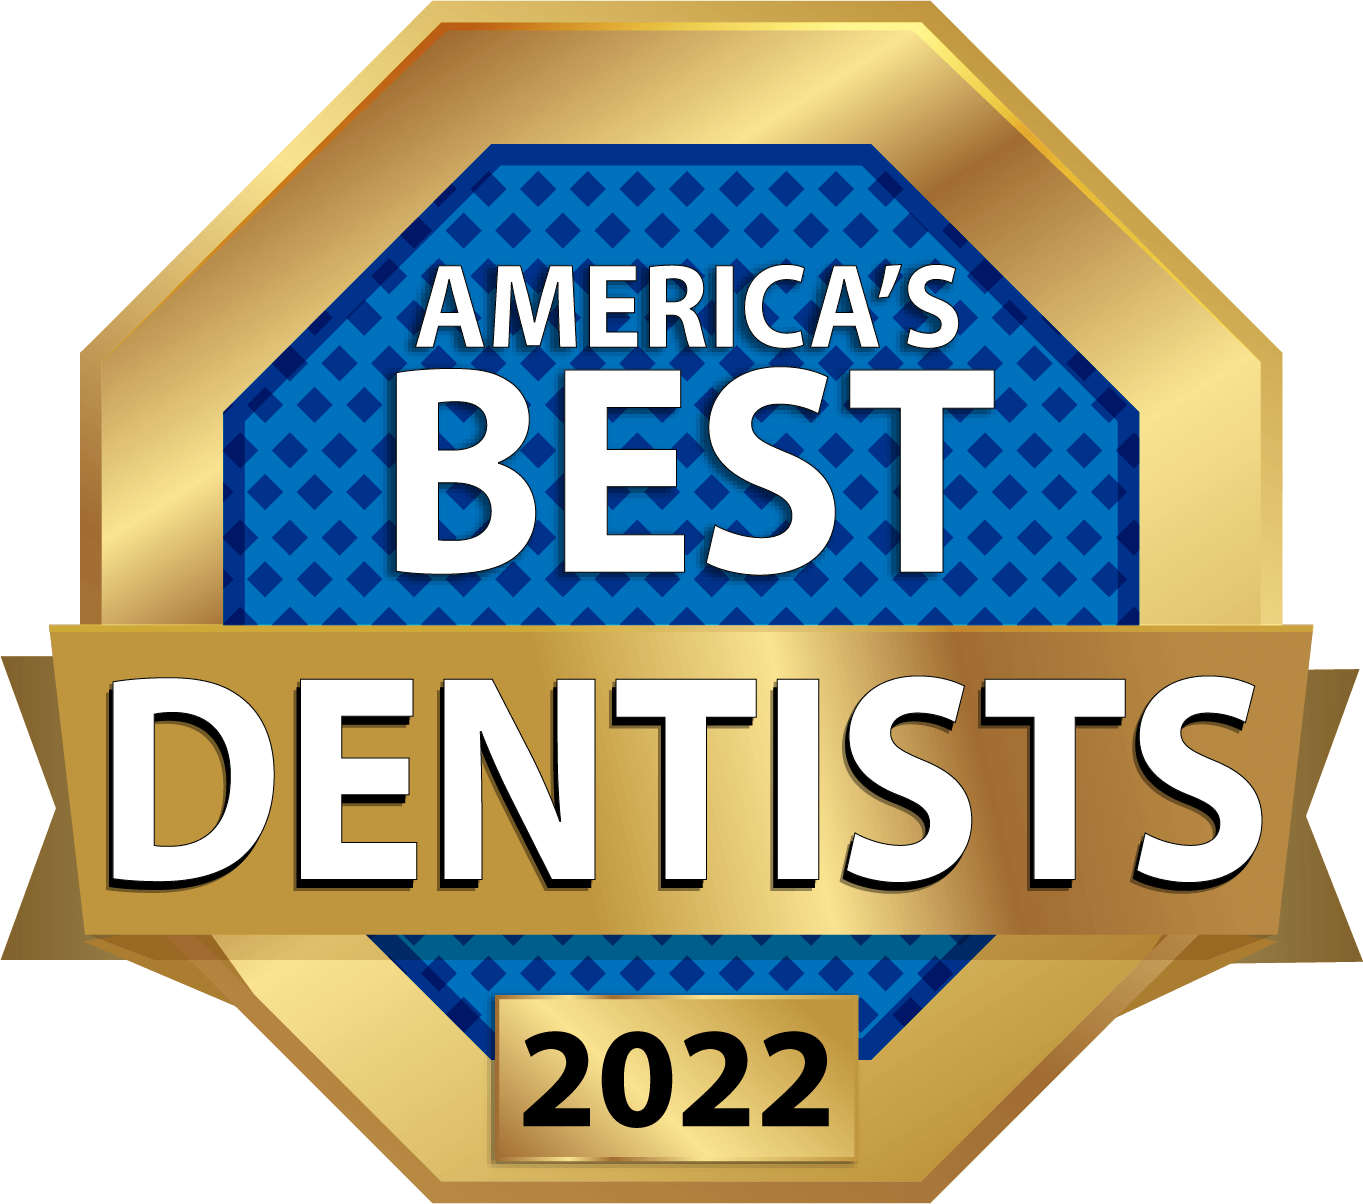 DentistOCTAGONAL-Blue-2022-Logos-Oct-29-2021